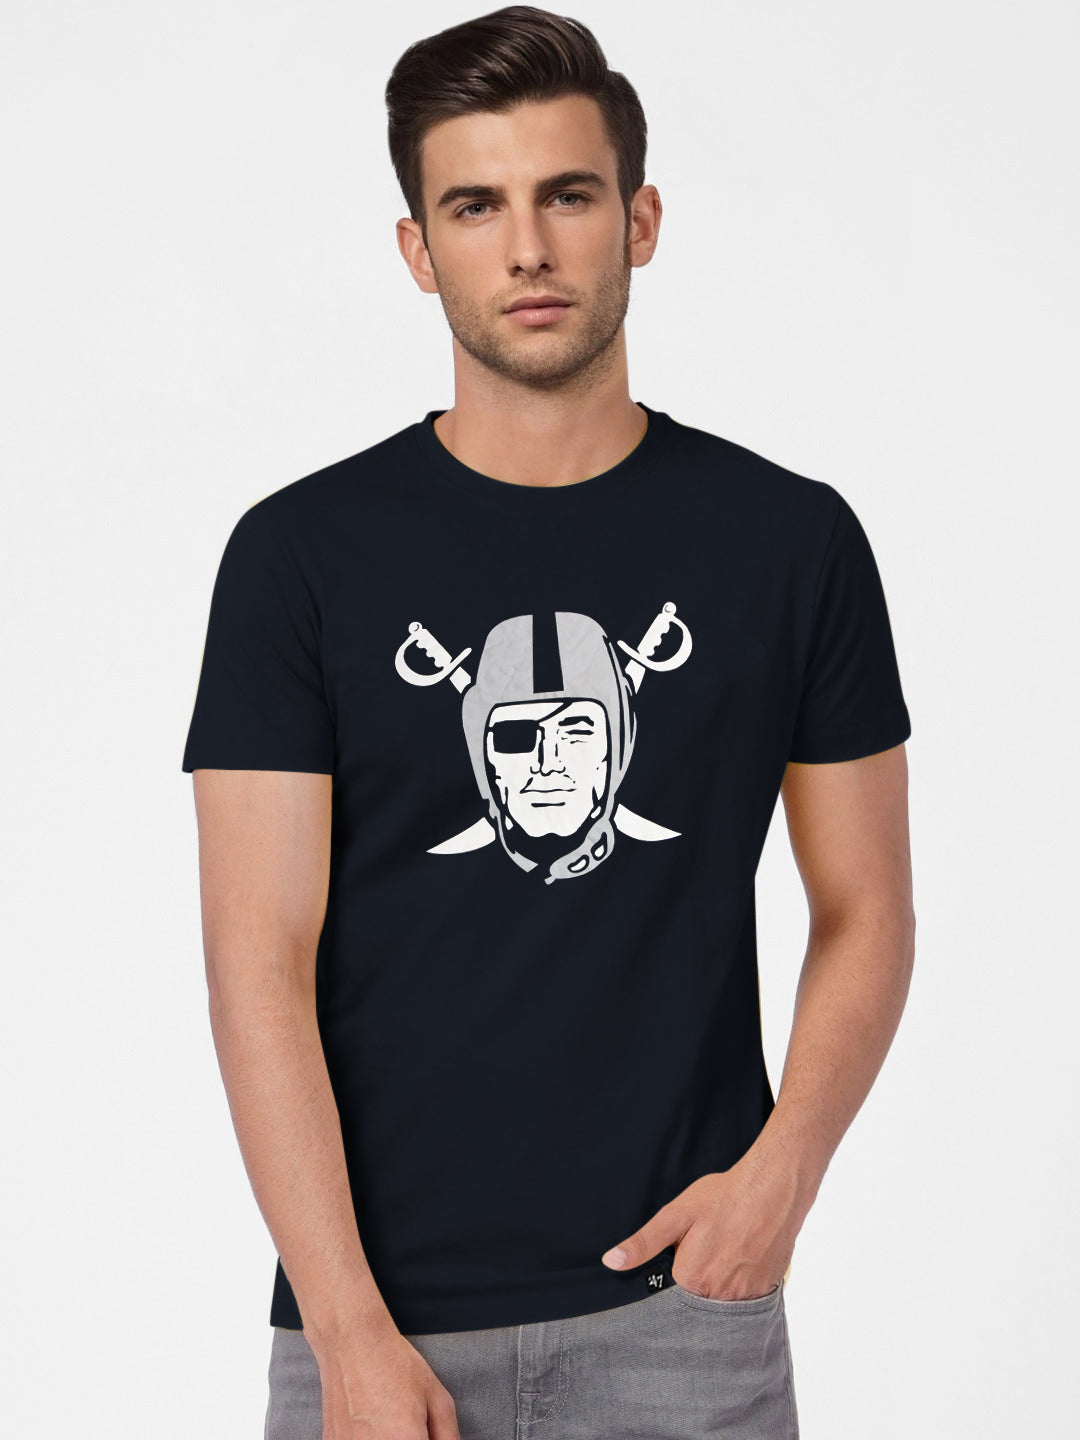 47 Crew Neck Half Sleeve Tee Shirt For Men-Dark Navy with Print-BE1102